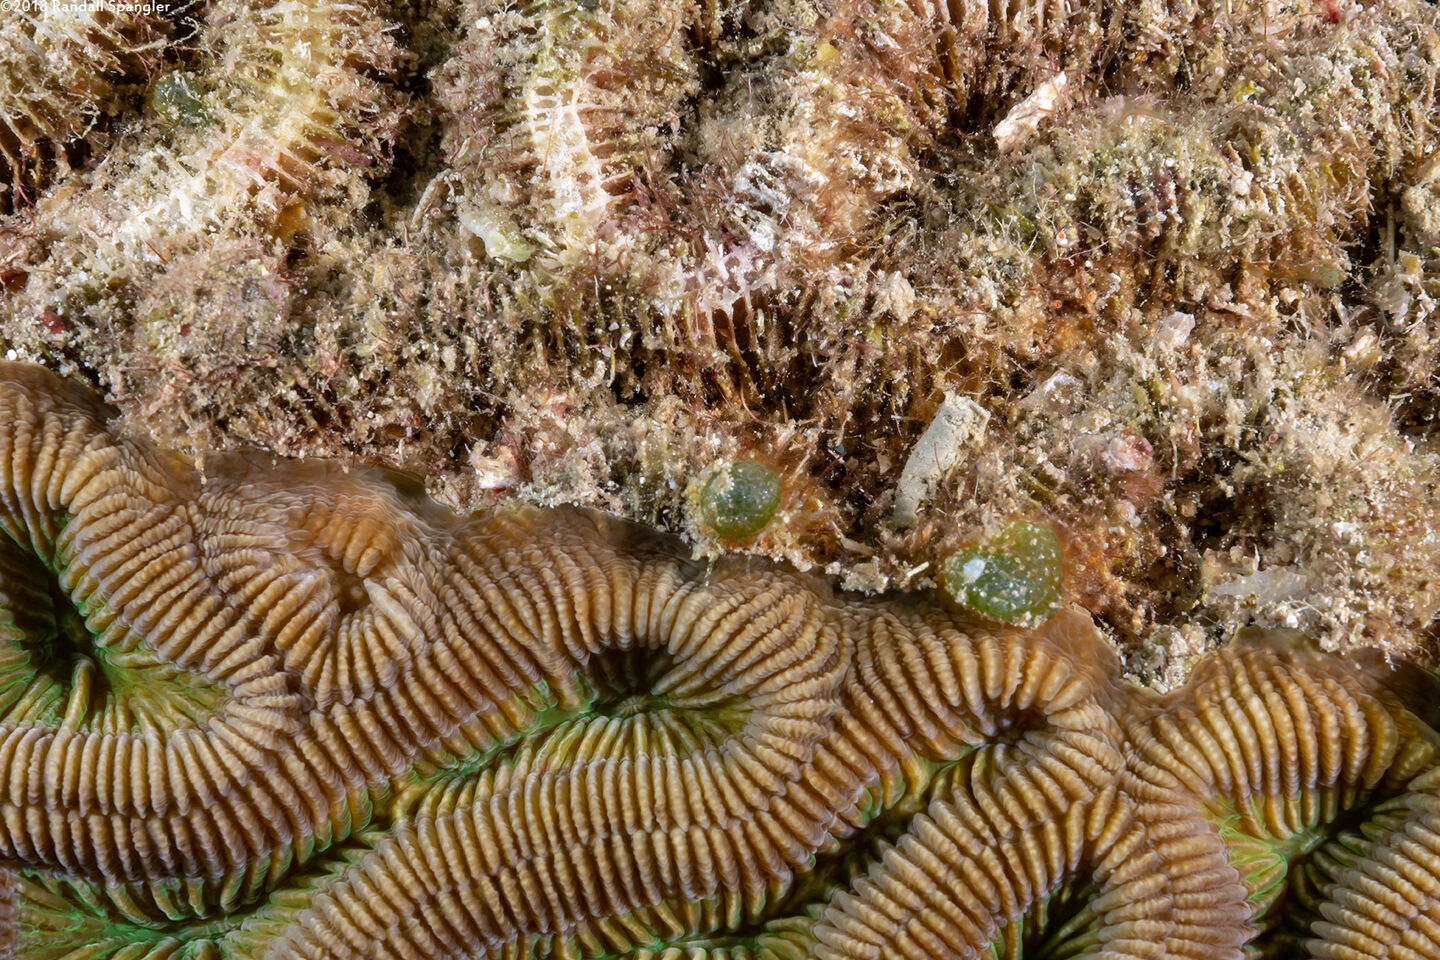 Colpophyllia natans (Boulder Brain Coral); Edge between living and dead coral